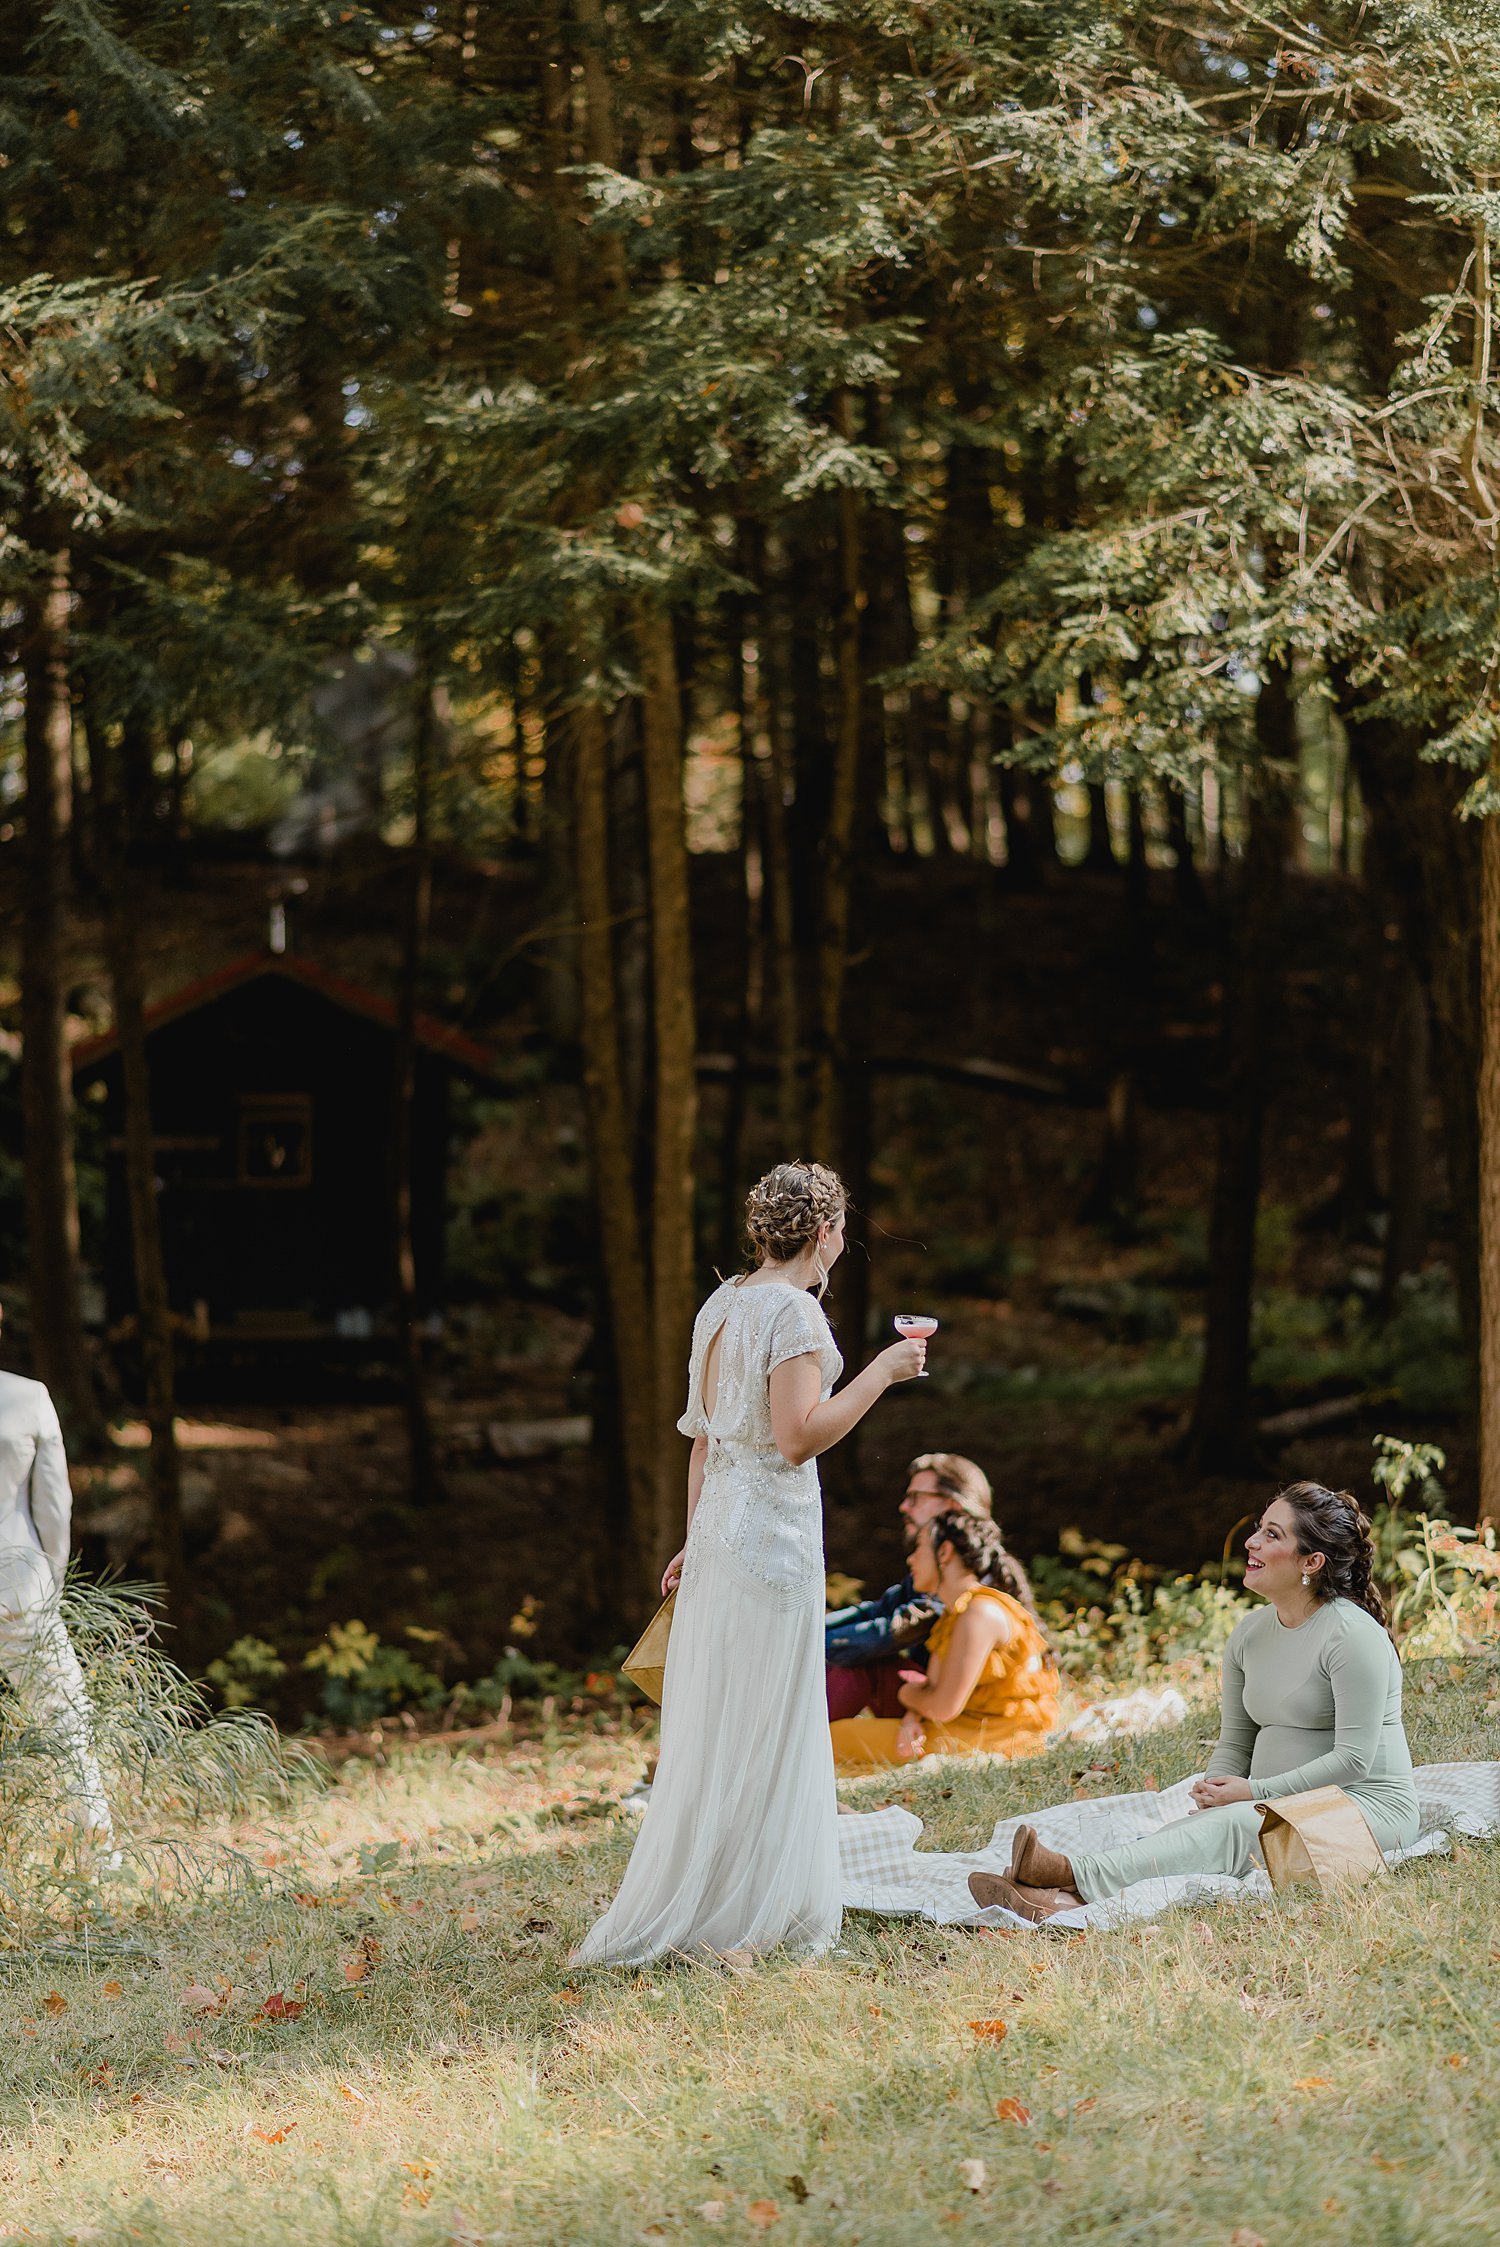 A Boho Fall Wedding at a Family Built Cabin in Lyndhurst, Ontario | Prince Edward County Wedding Photographer | Holly McMurter Photographs_0132.jpg